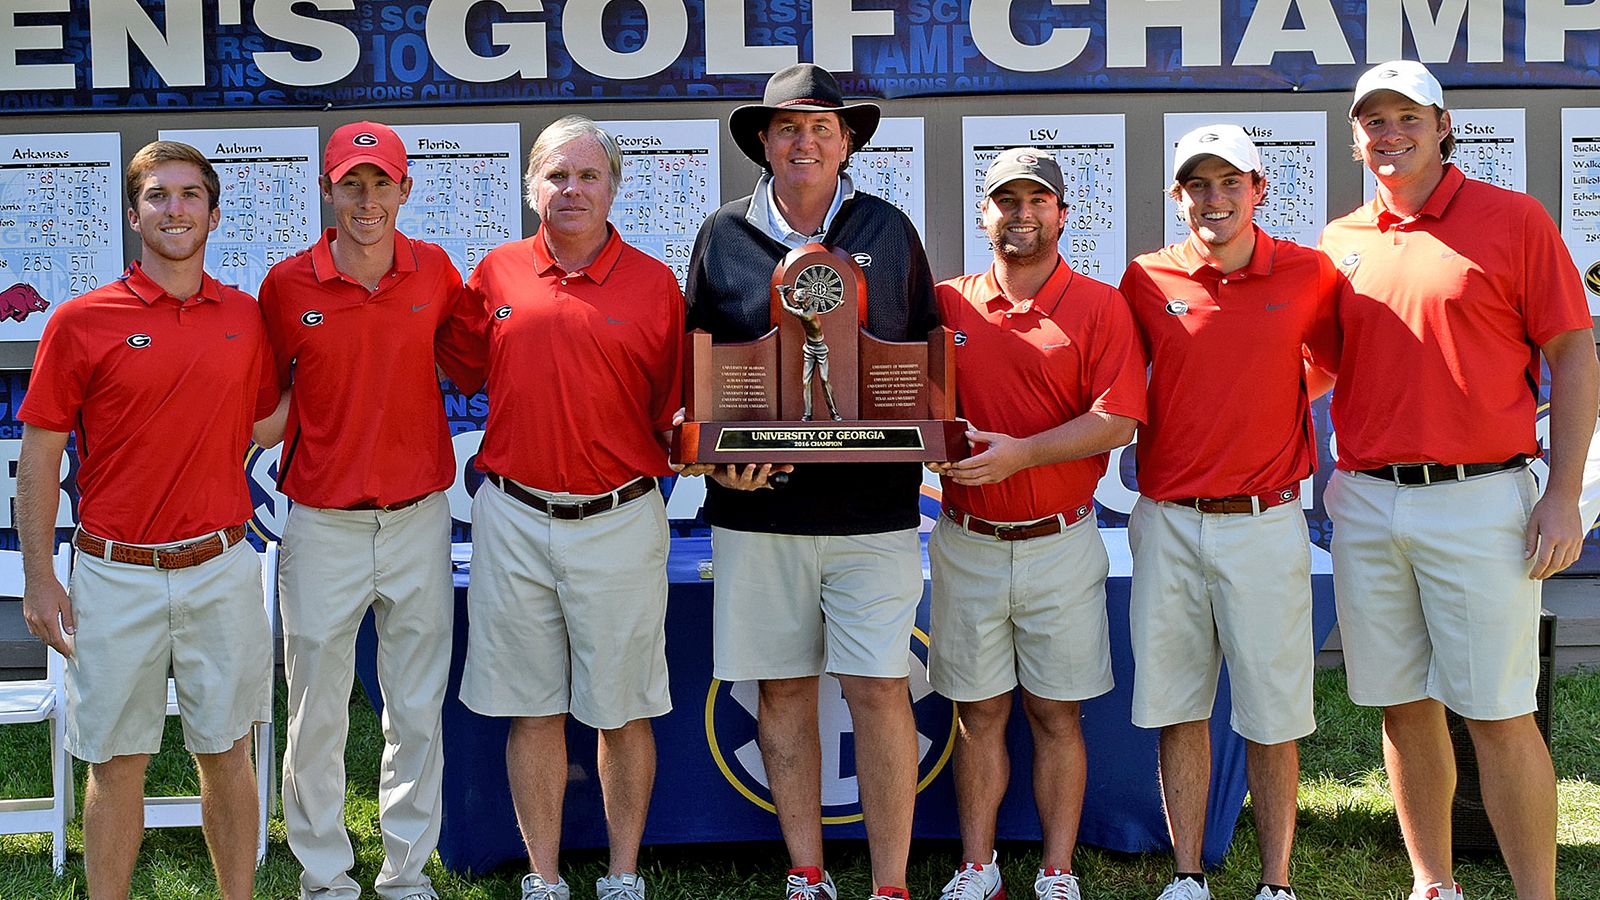 McCoyled Bulldogs win SEC Men's Golf Championship